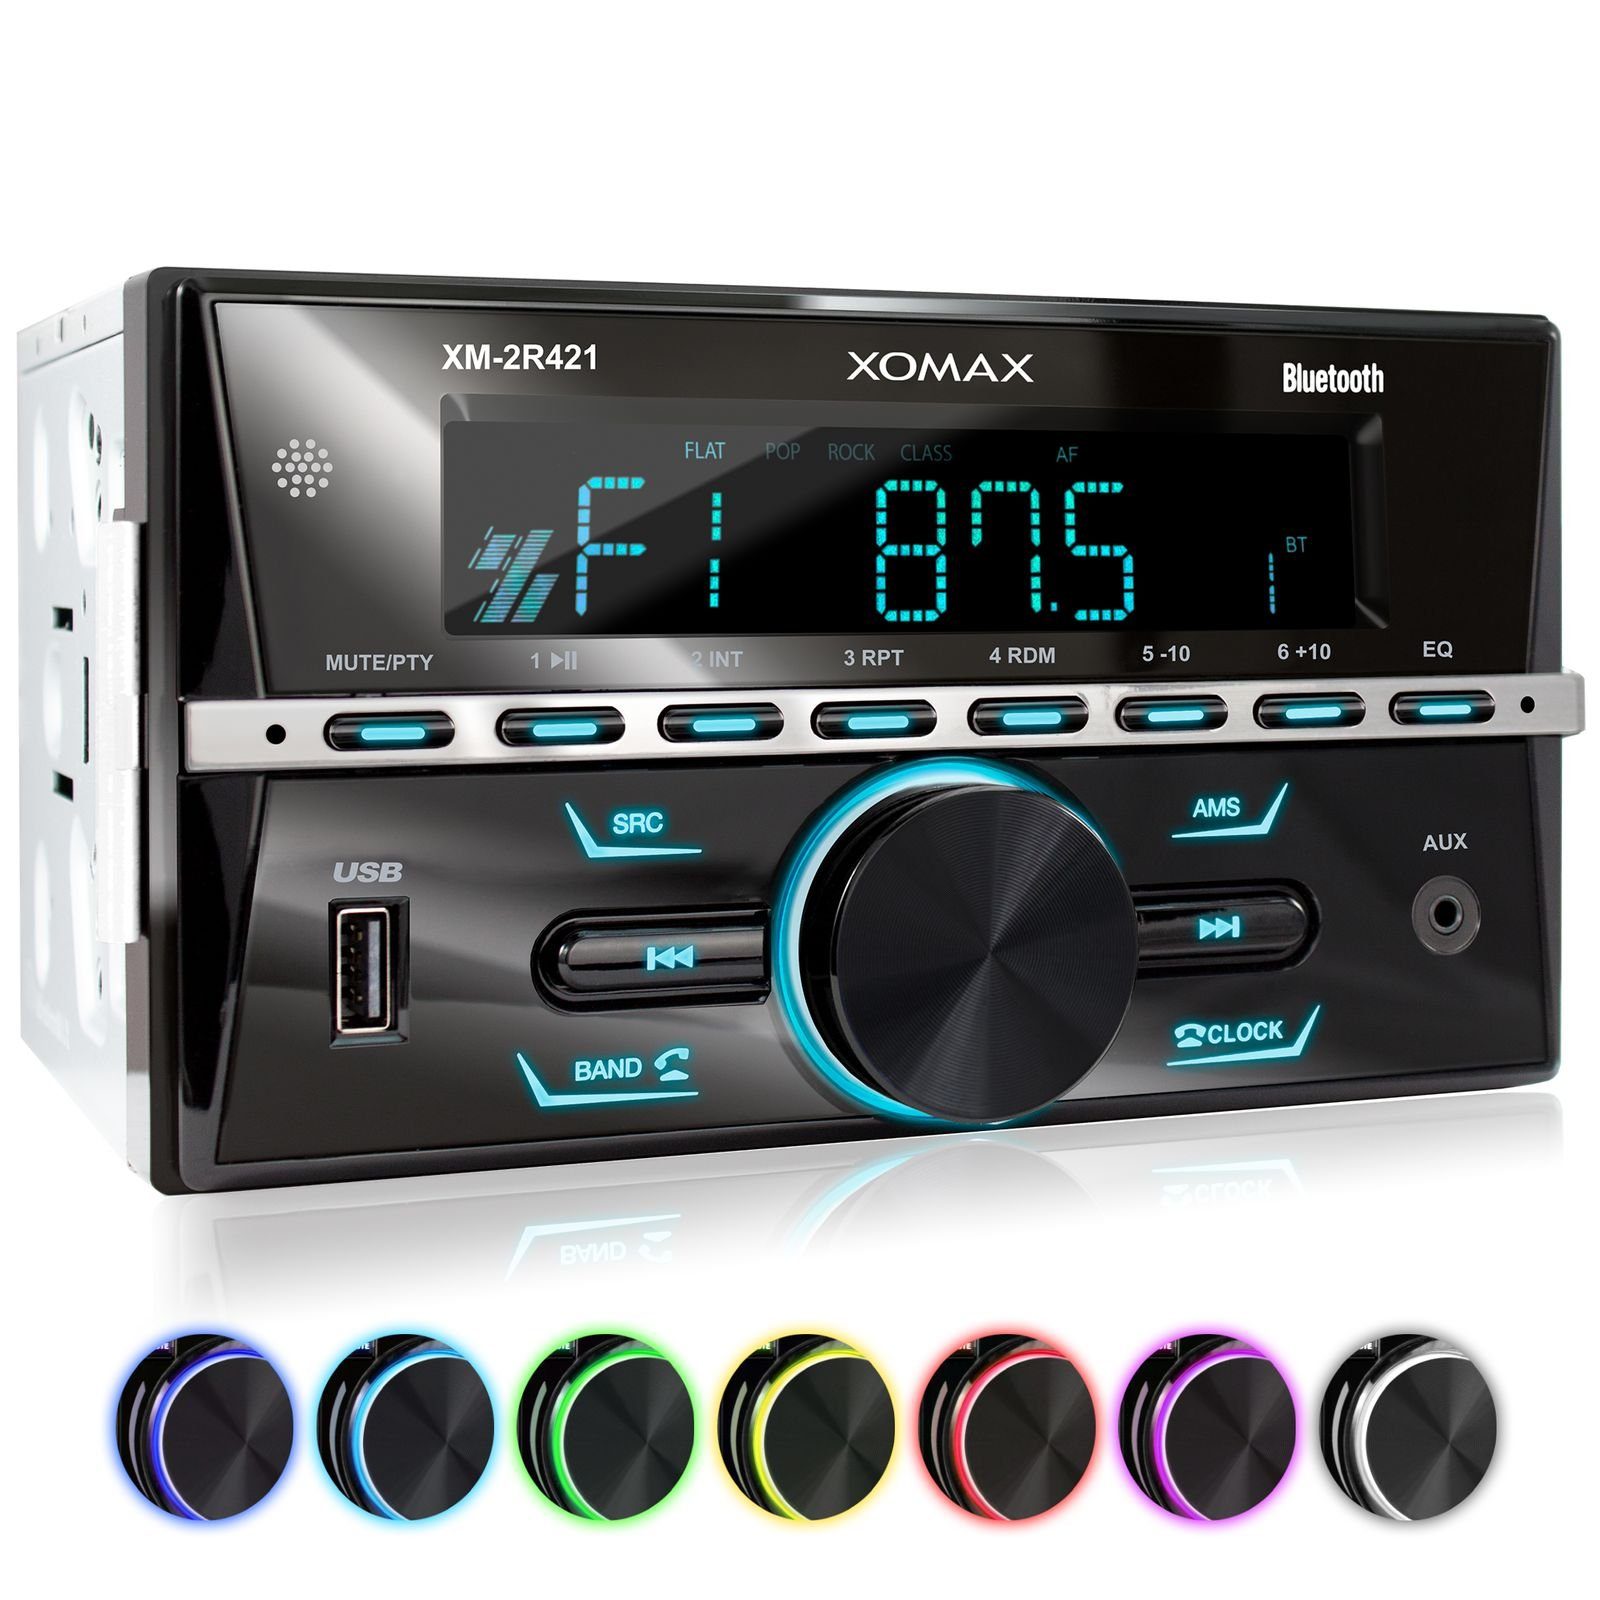 XOMAX XM-2R421 Autoradio mit Bluetooth, USB und AUX-IN, 2 DIN Autoradio